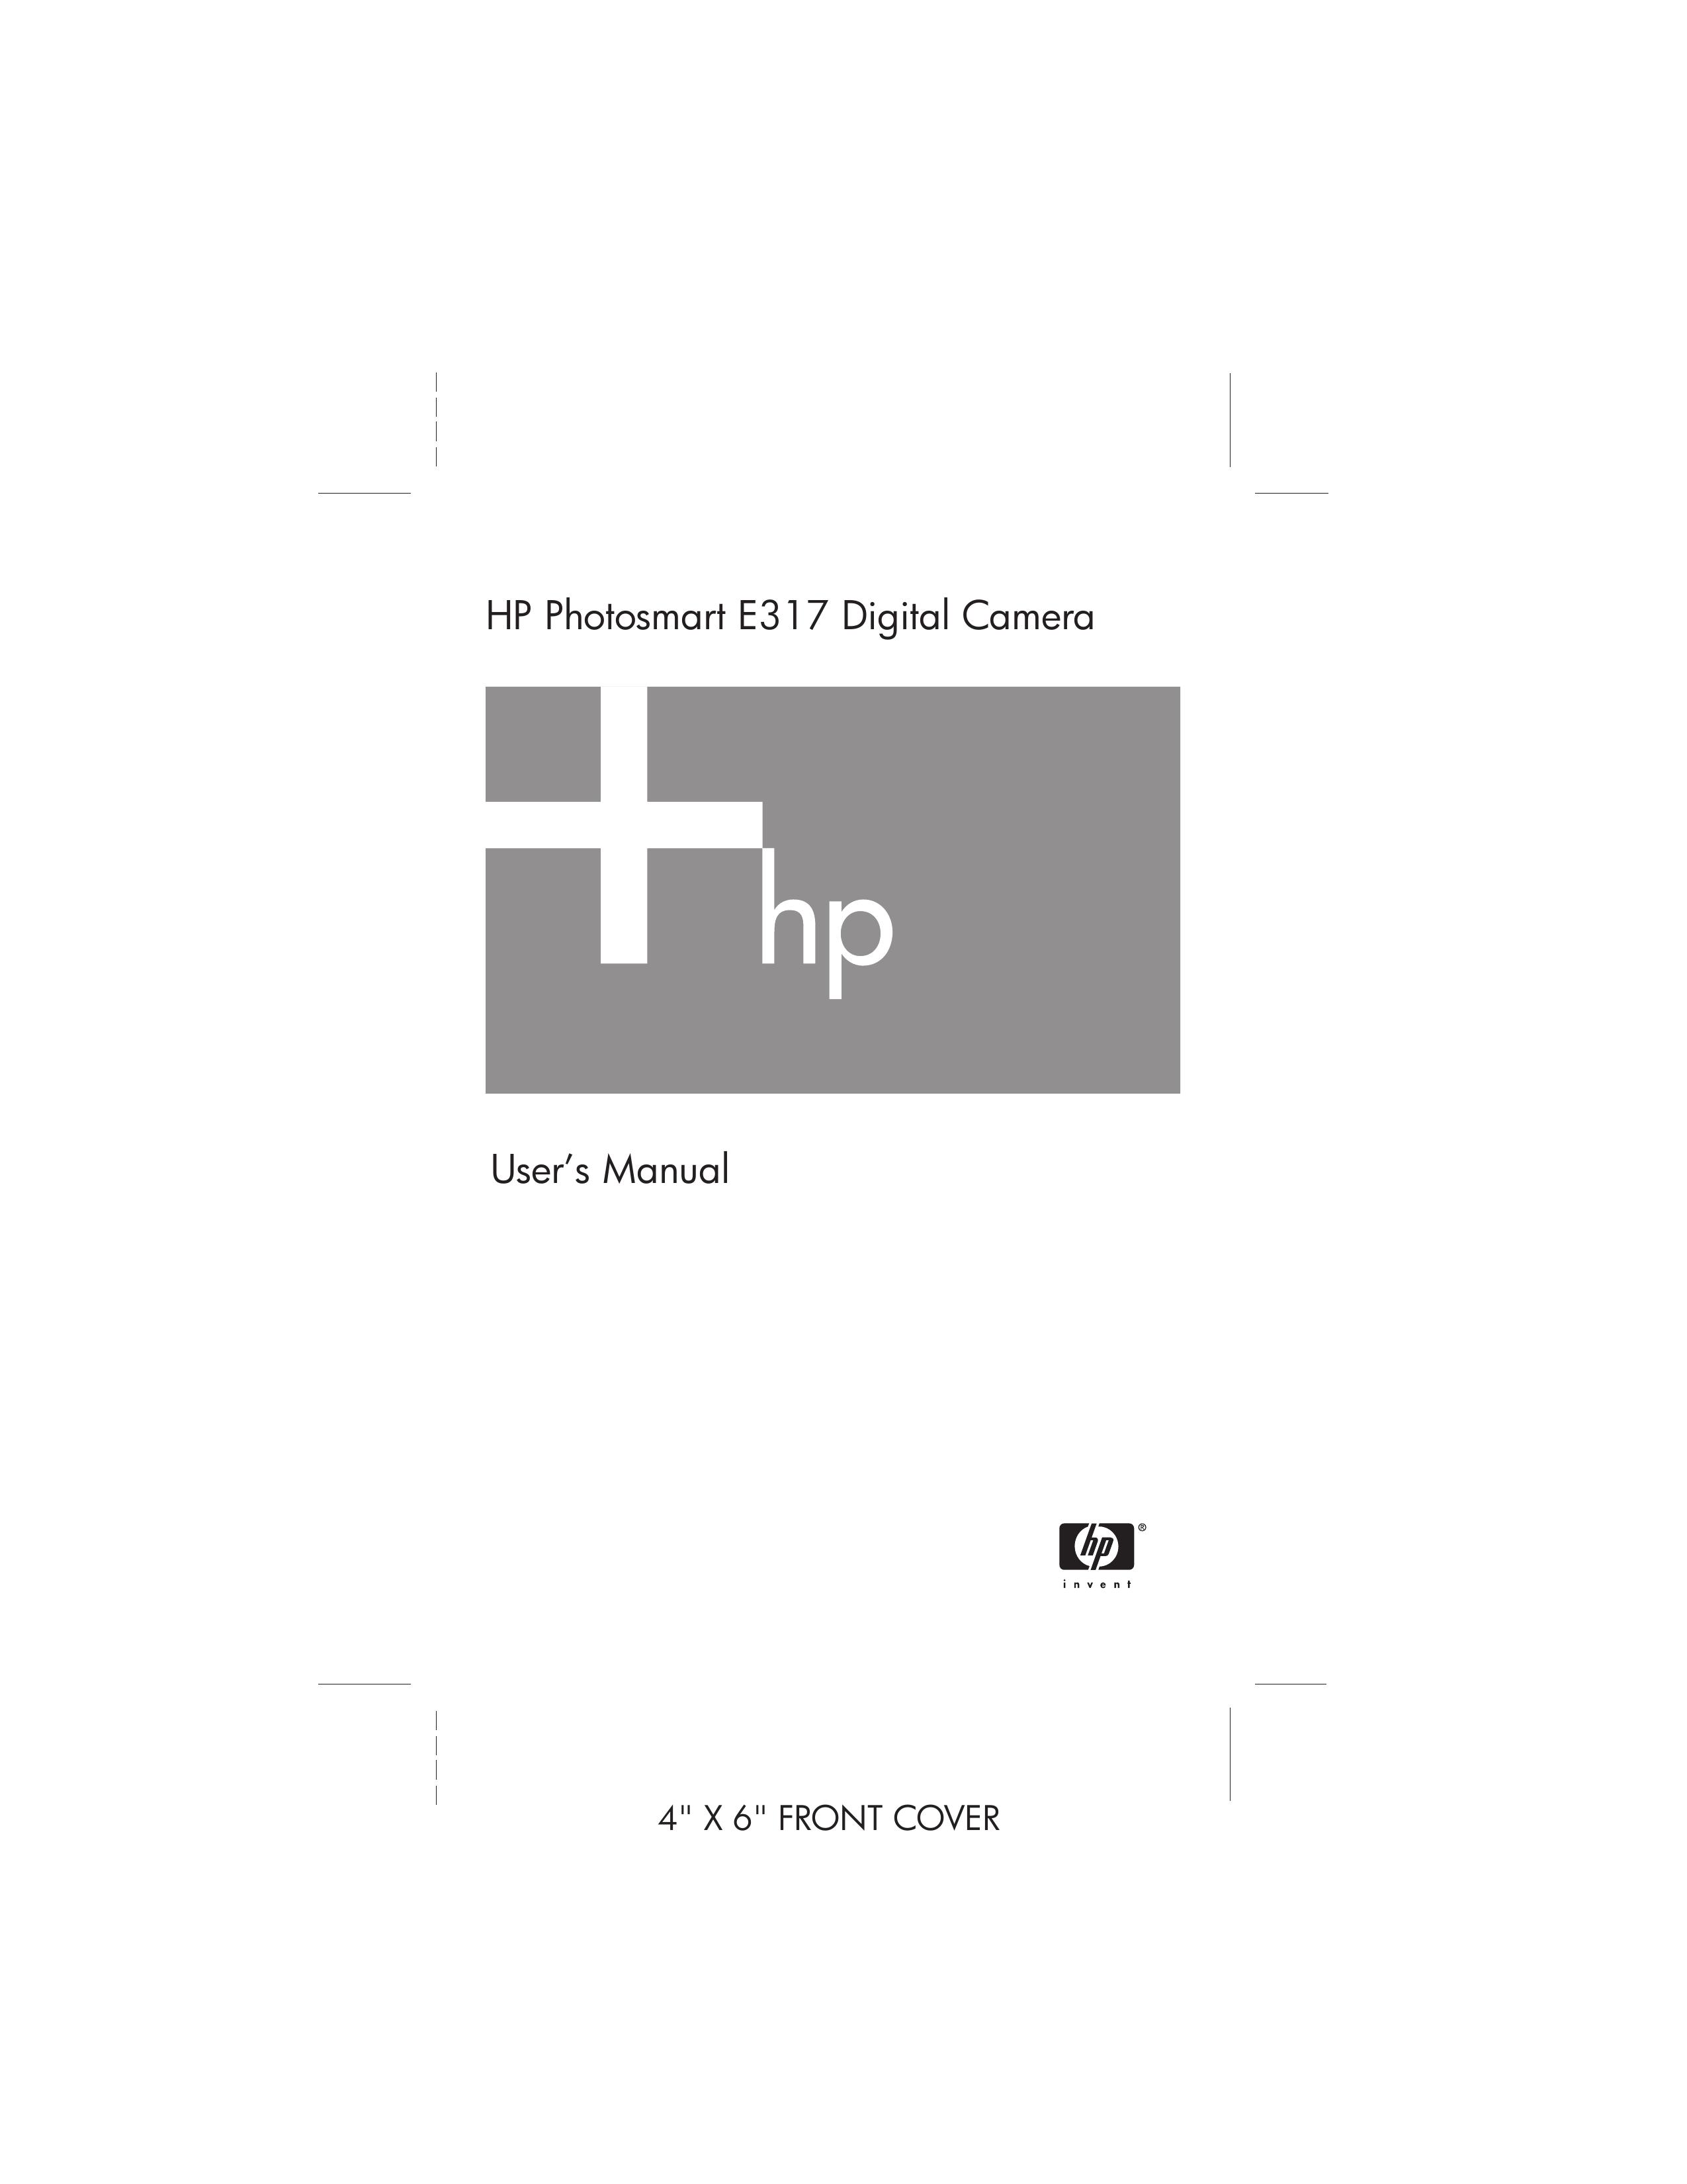 HP (Hewlett-Packard) E317 Digital Camera User Manual